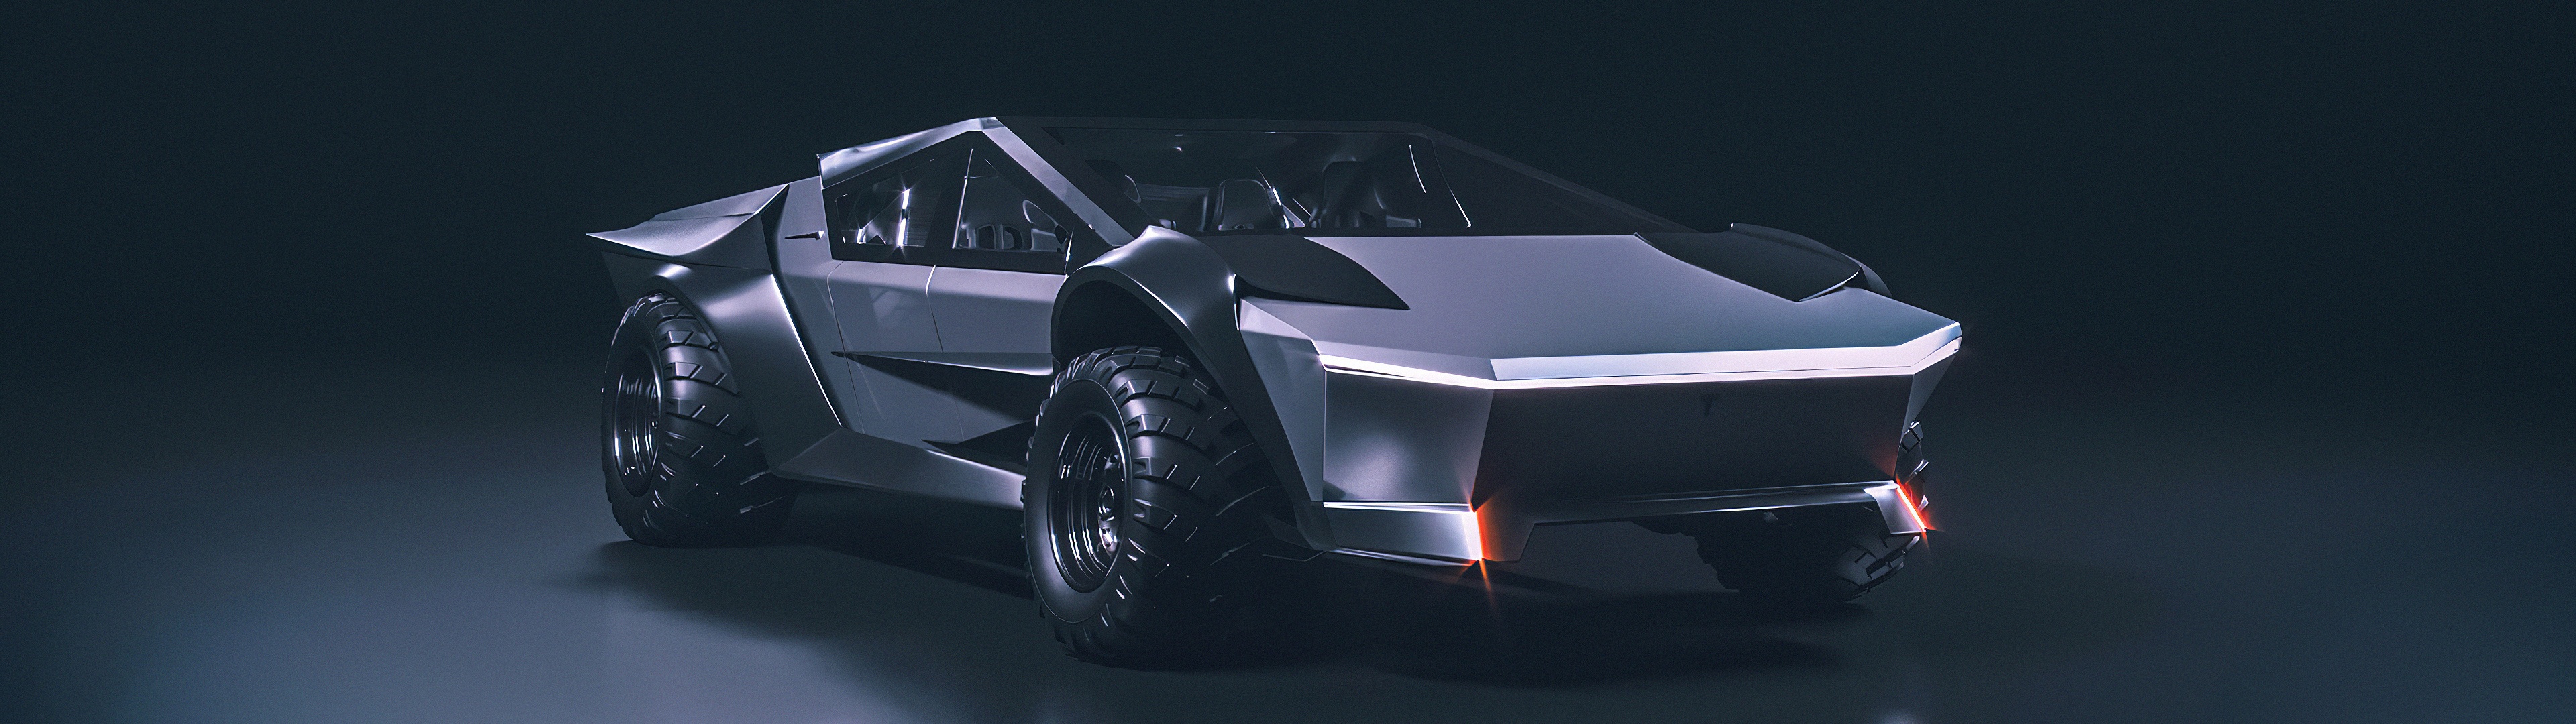 Tesla Cybertruck Wallpaper 4K, Concept Cars, Dark Background, Black Dark